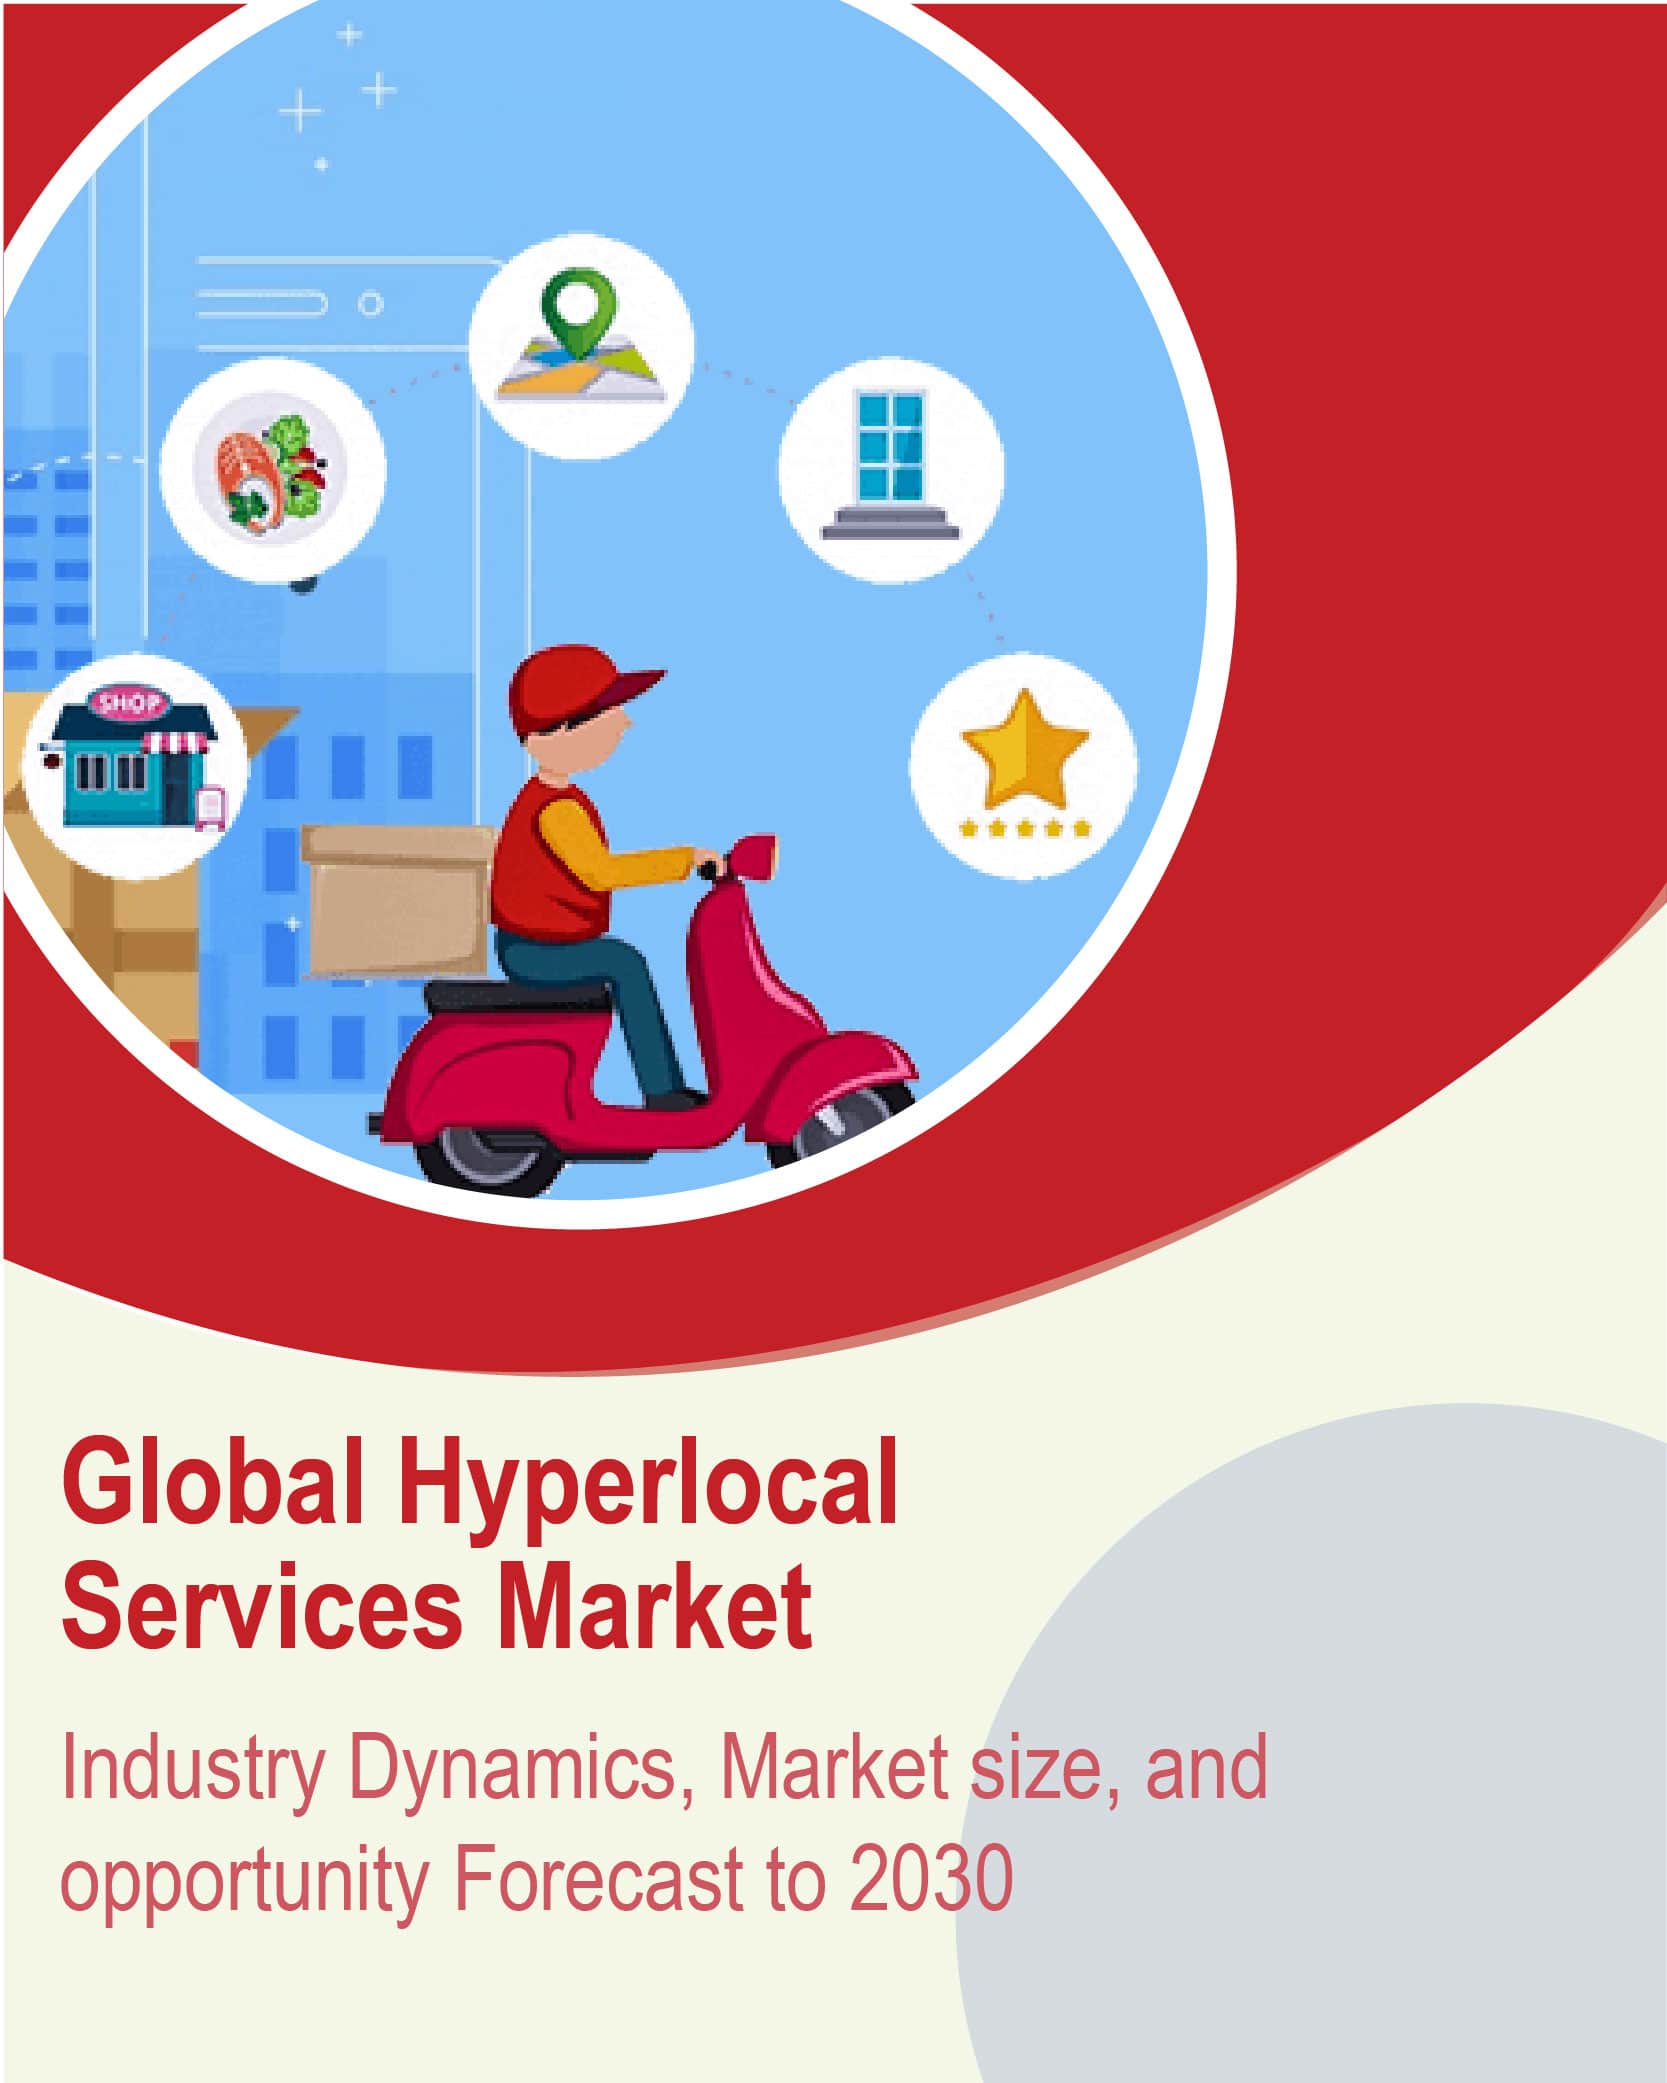 Hyperlocal Services Market